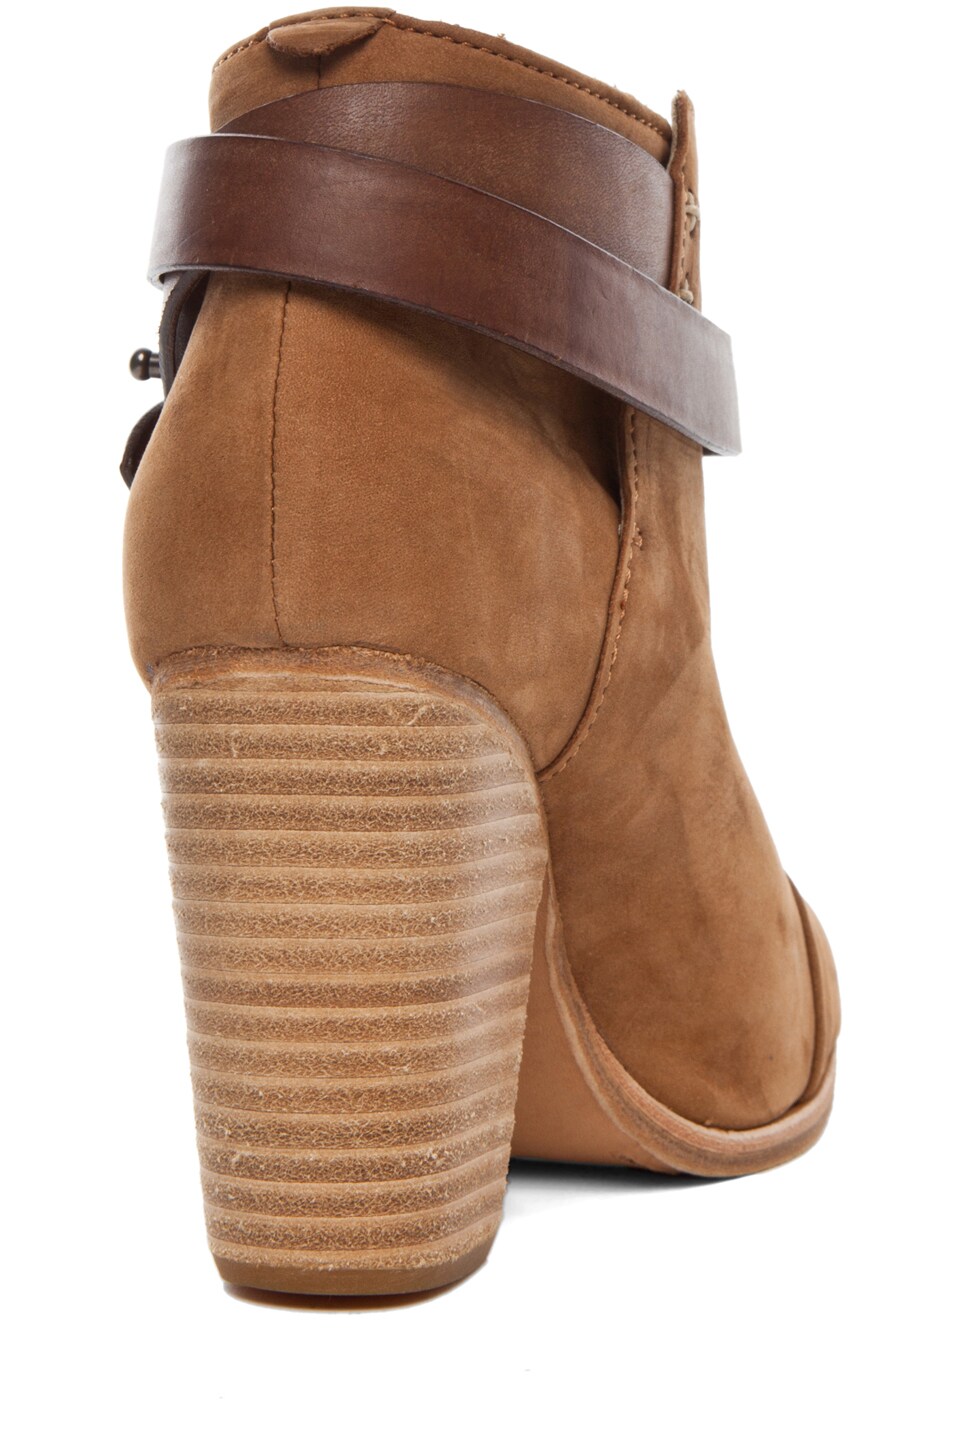 Rag & Bone Harrow Suede Boots in Camel | FWRD